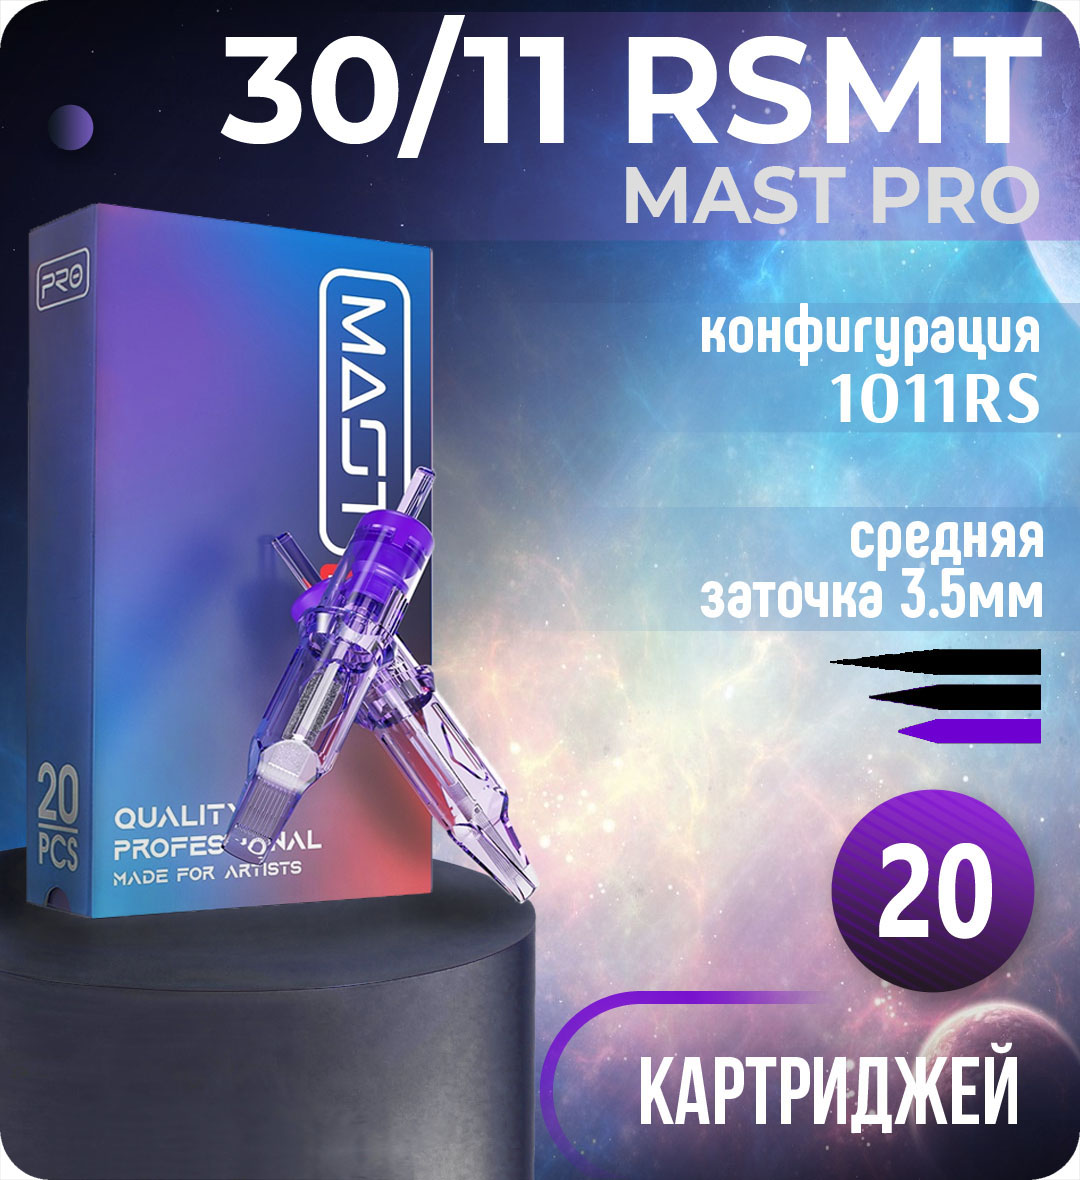 Картриджи Mast Pro 30/11 RSMT (1011RS) для тату, перманентного макияжа и татуажа Dragonhawk 20шт